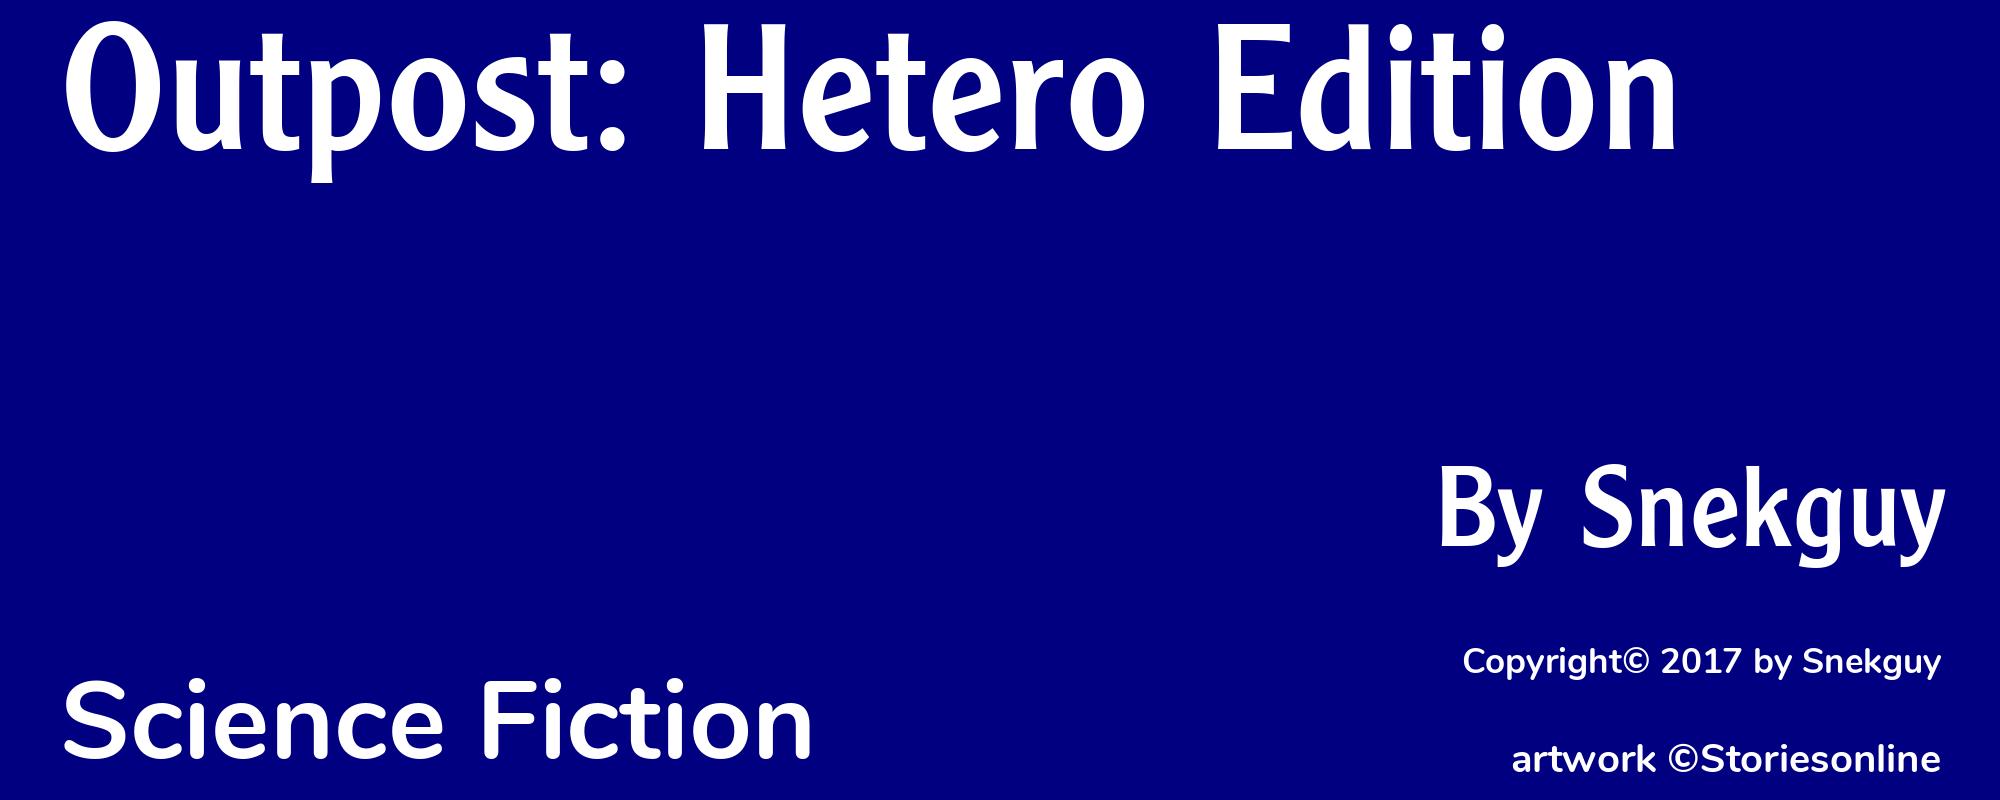 Outpost: Hetero Edition - Cover